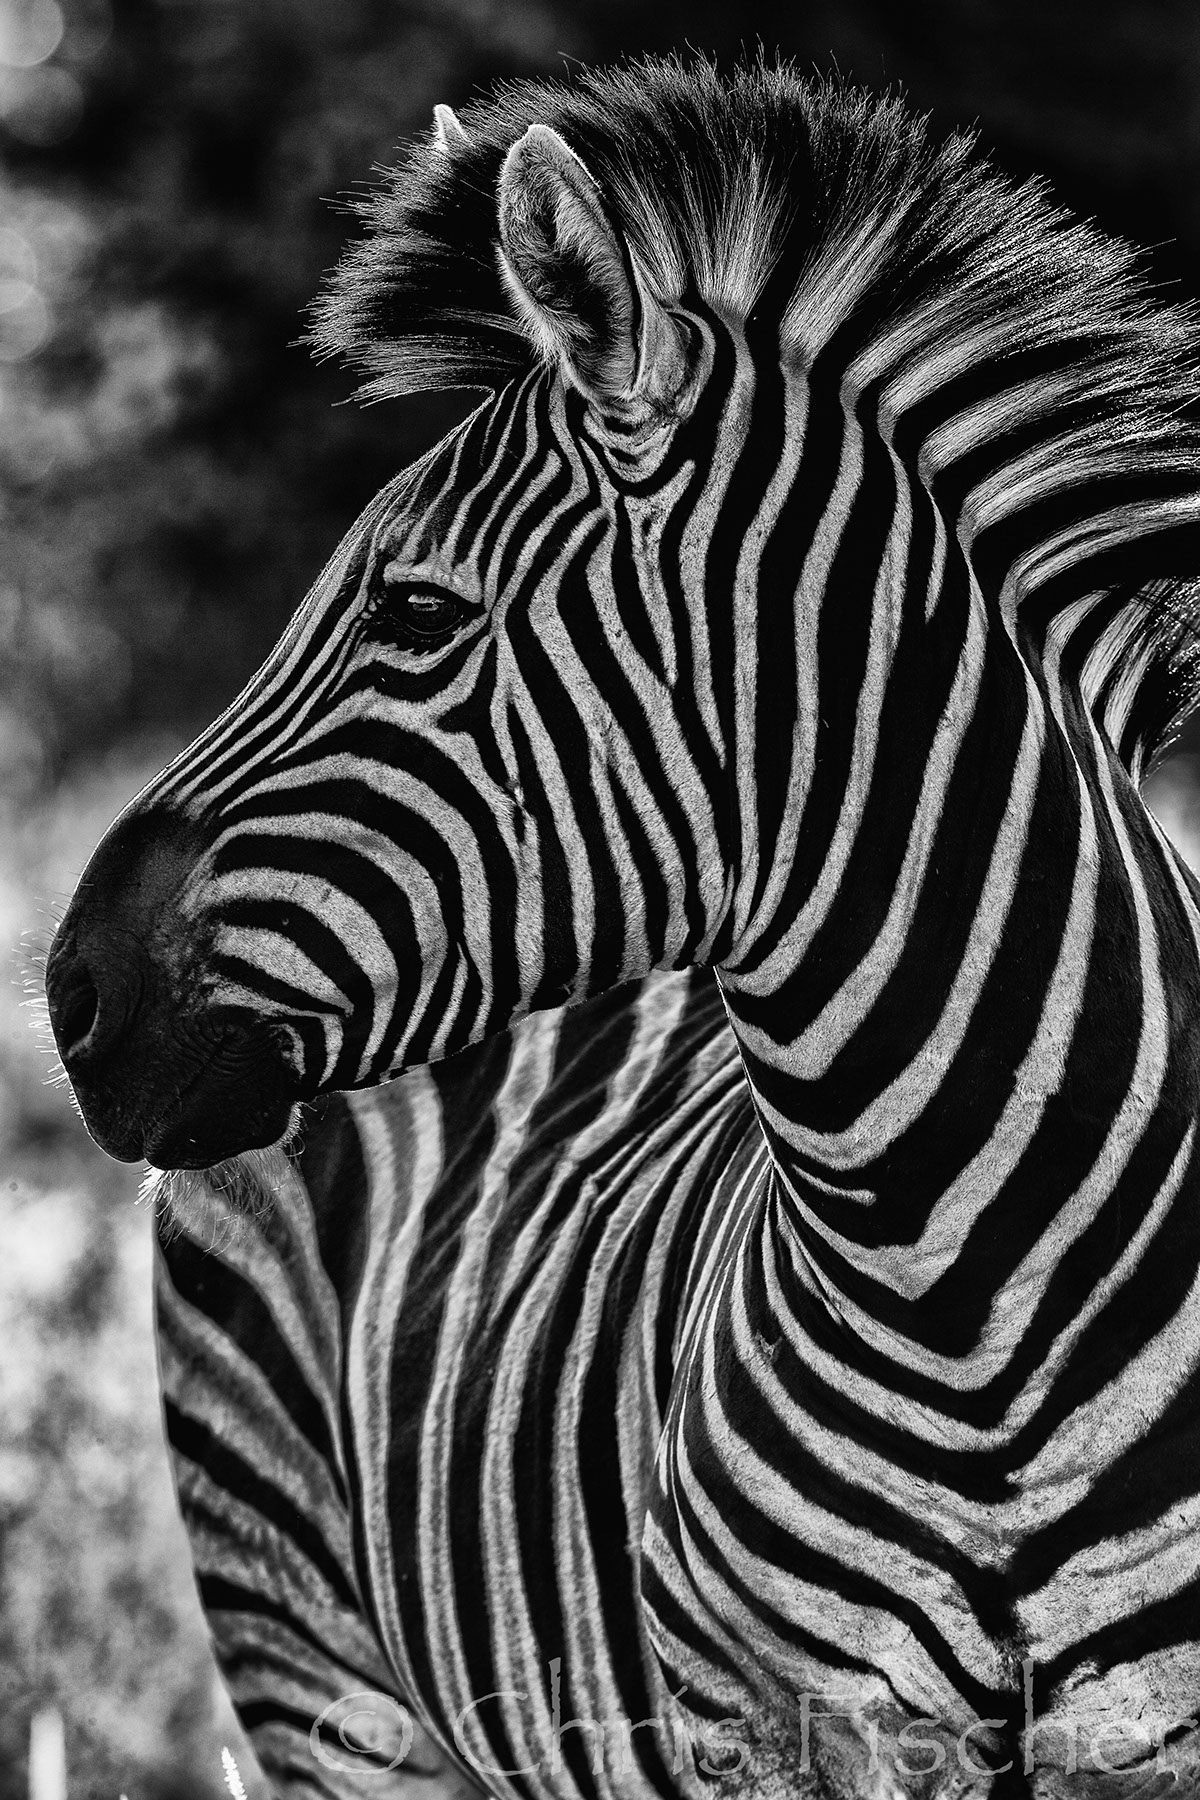 jackel Nature Travel photo art zebra cape buffalo africa Botswana south africa safari